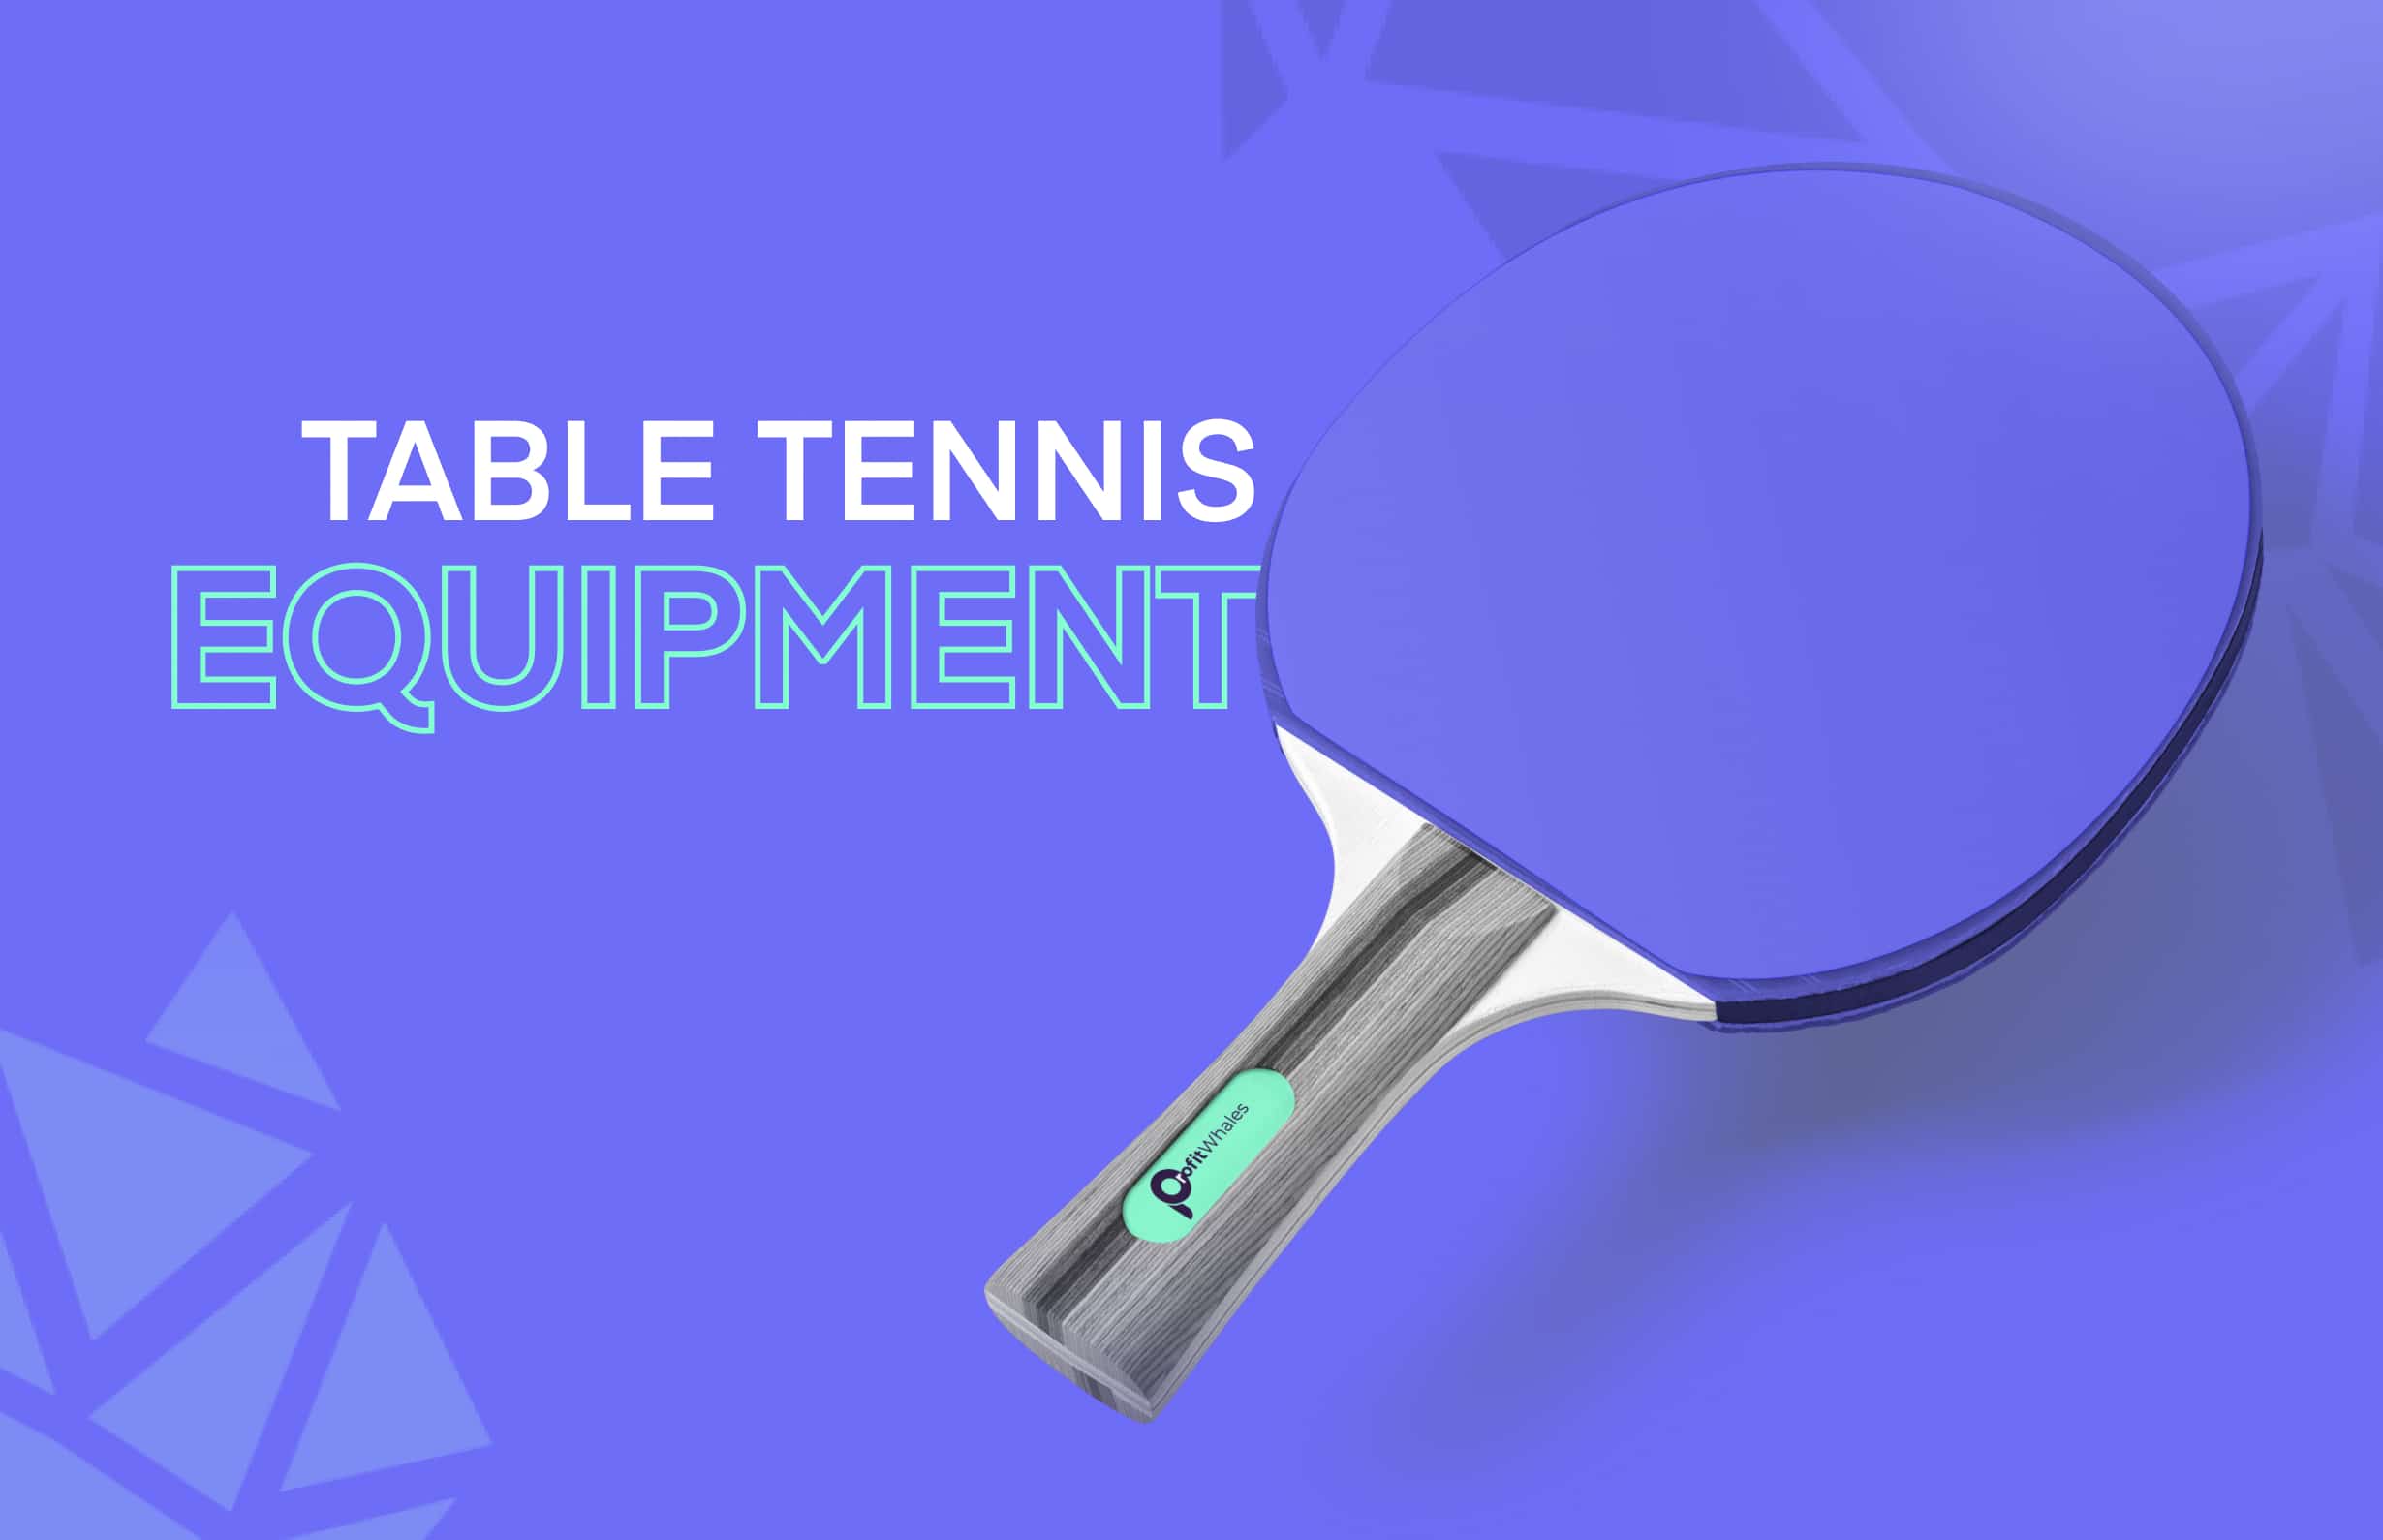 Table Tennis Equipment Case Study